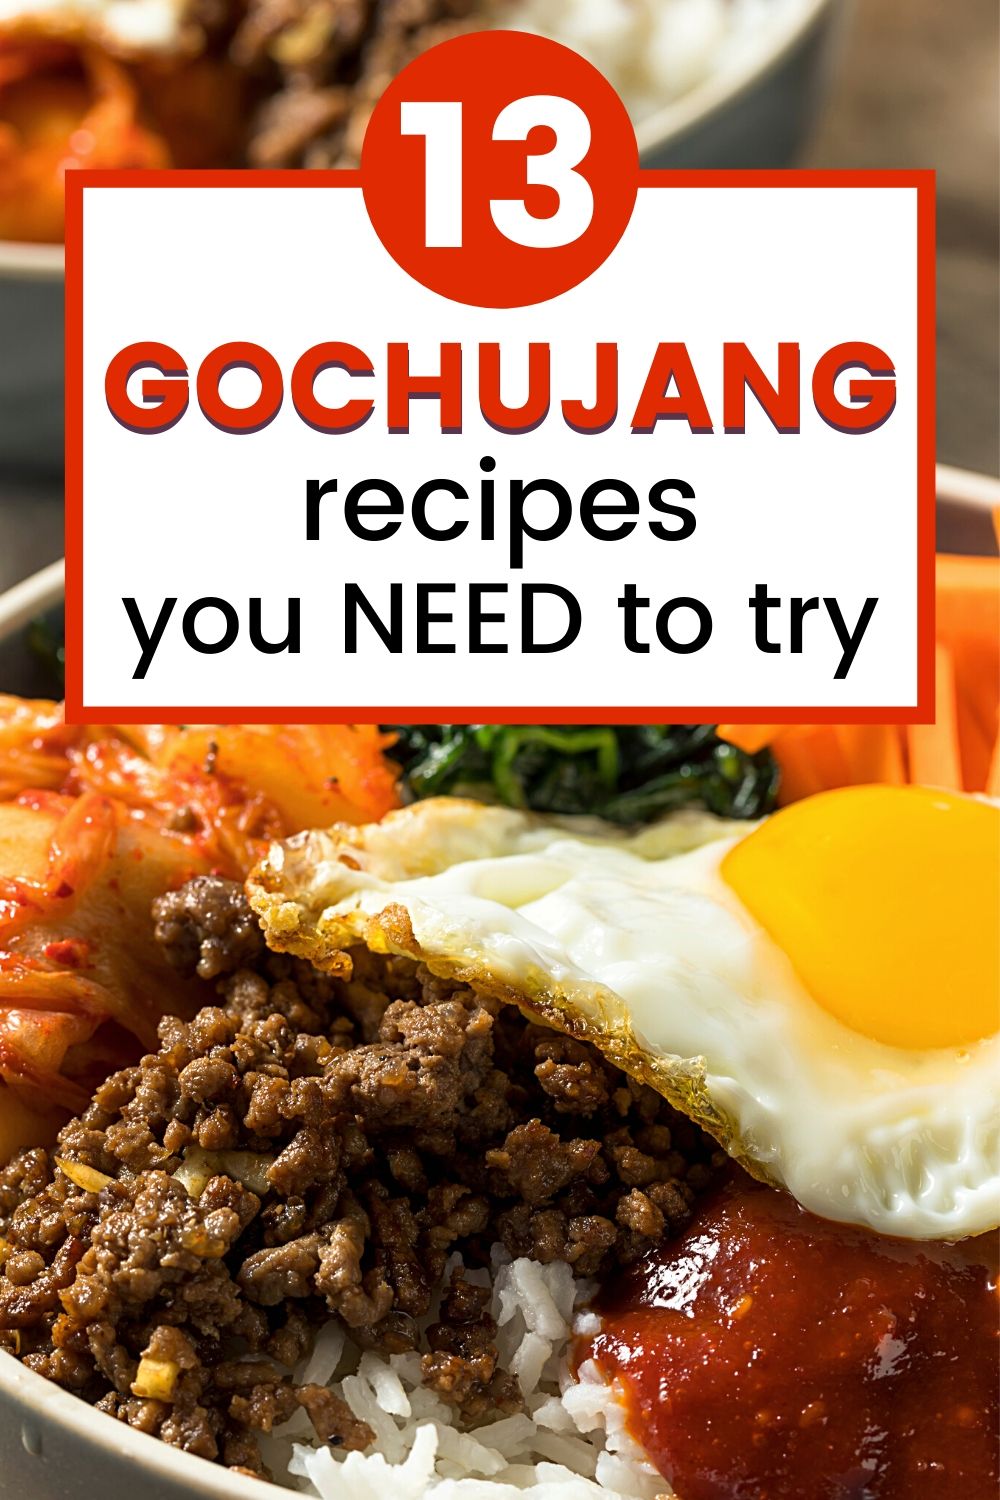 gochujang recipes graphic